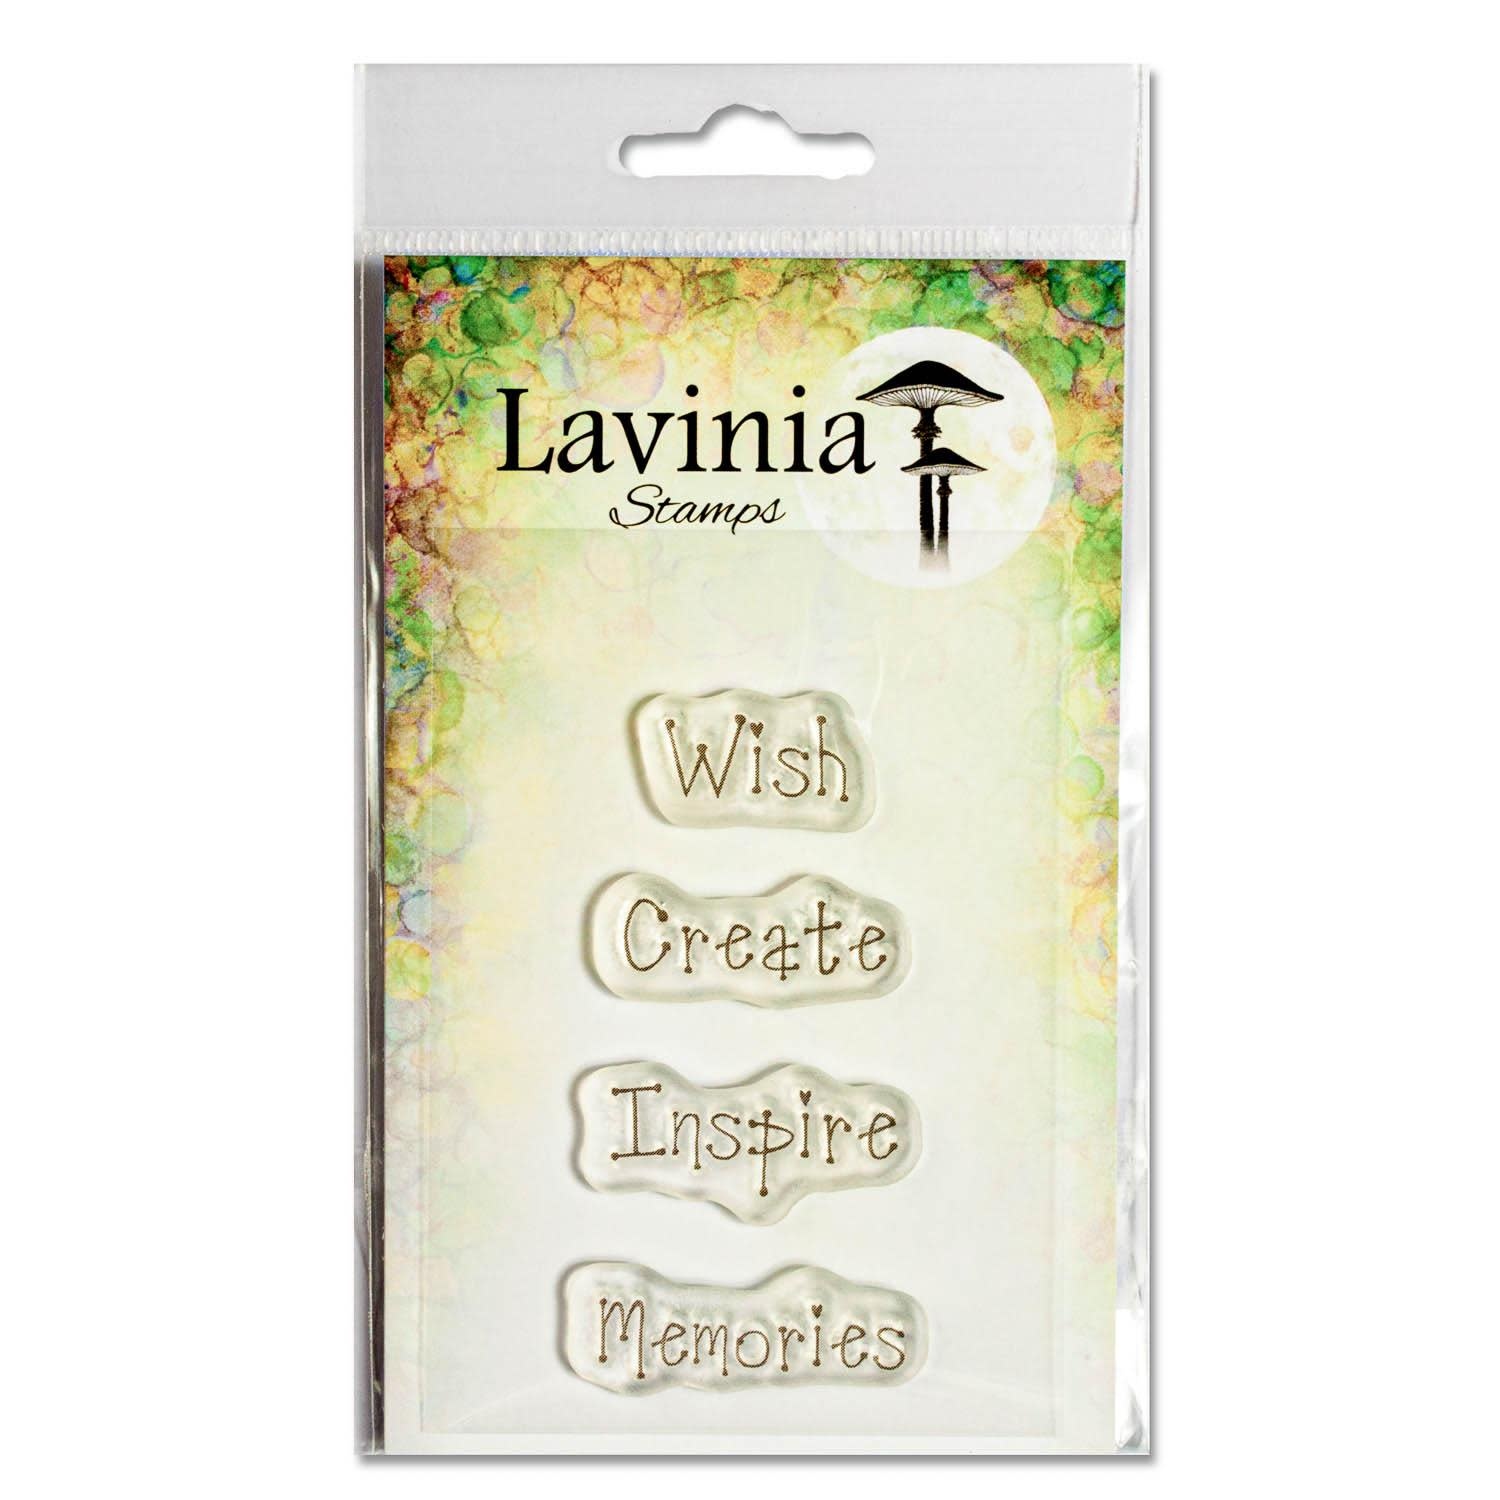 Lavinia Balance lav816